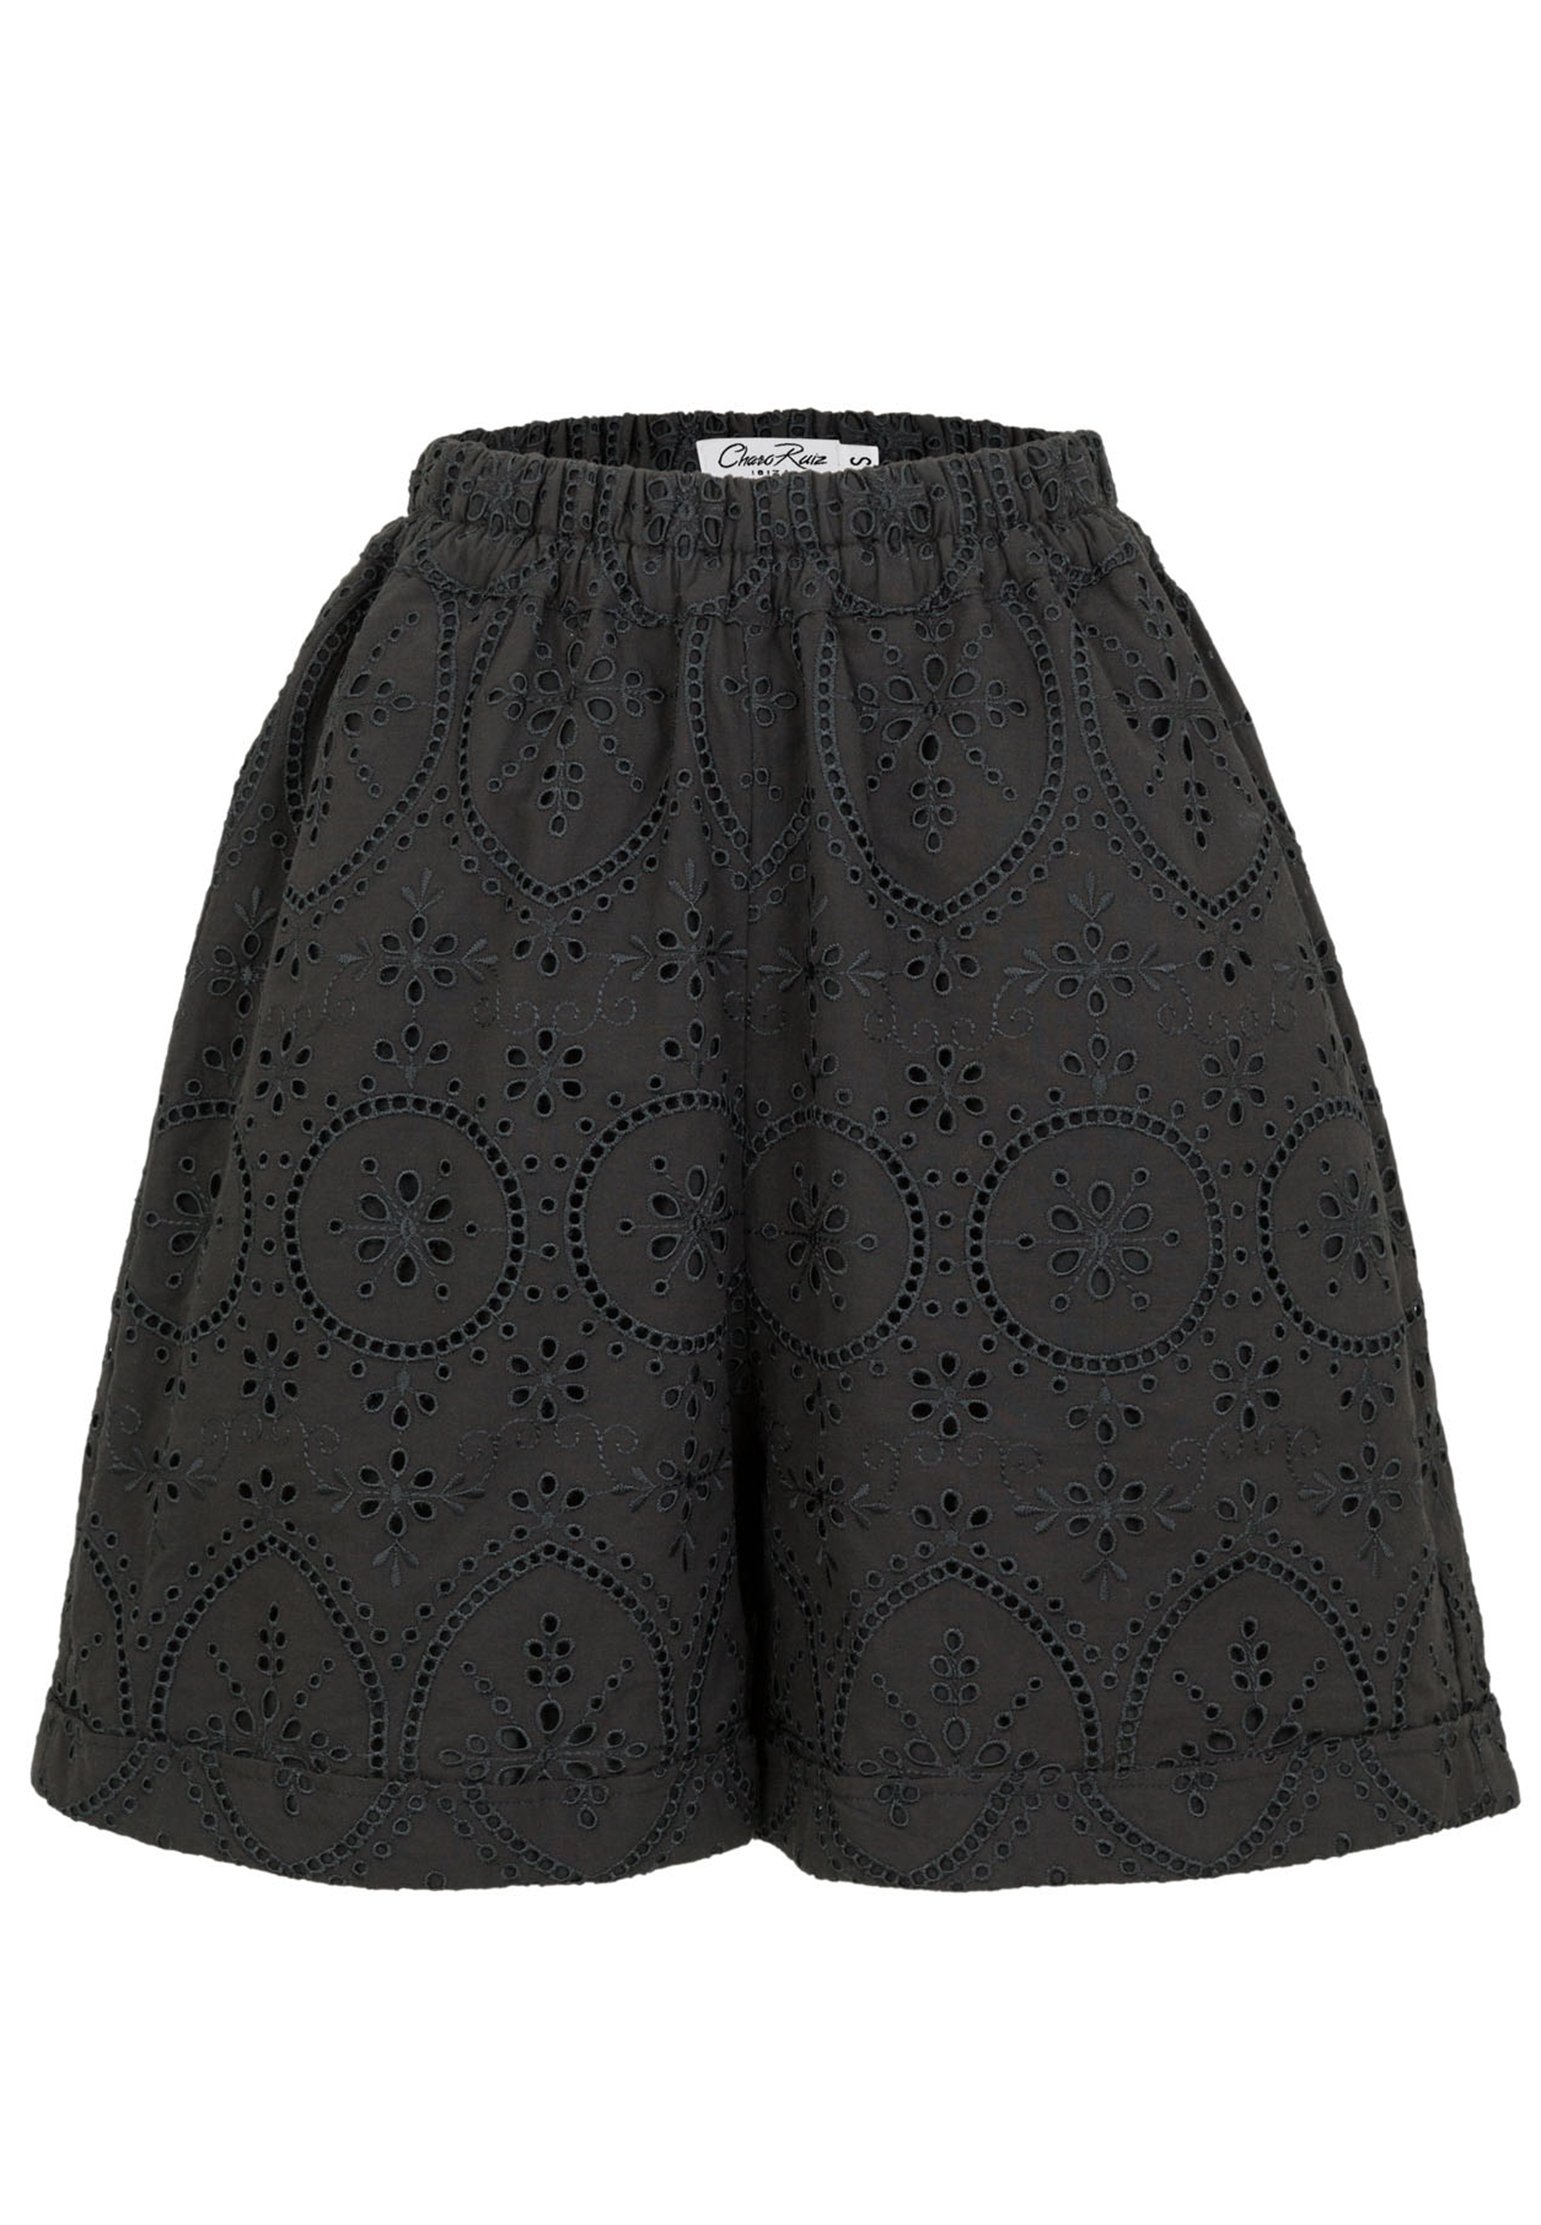 Shorts CHARO RUIZ Color: black (Code: 2031) in online store Allure